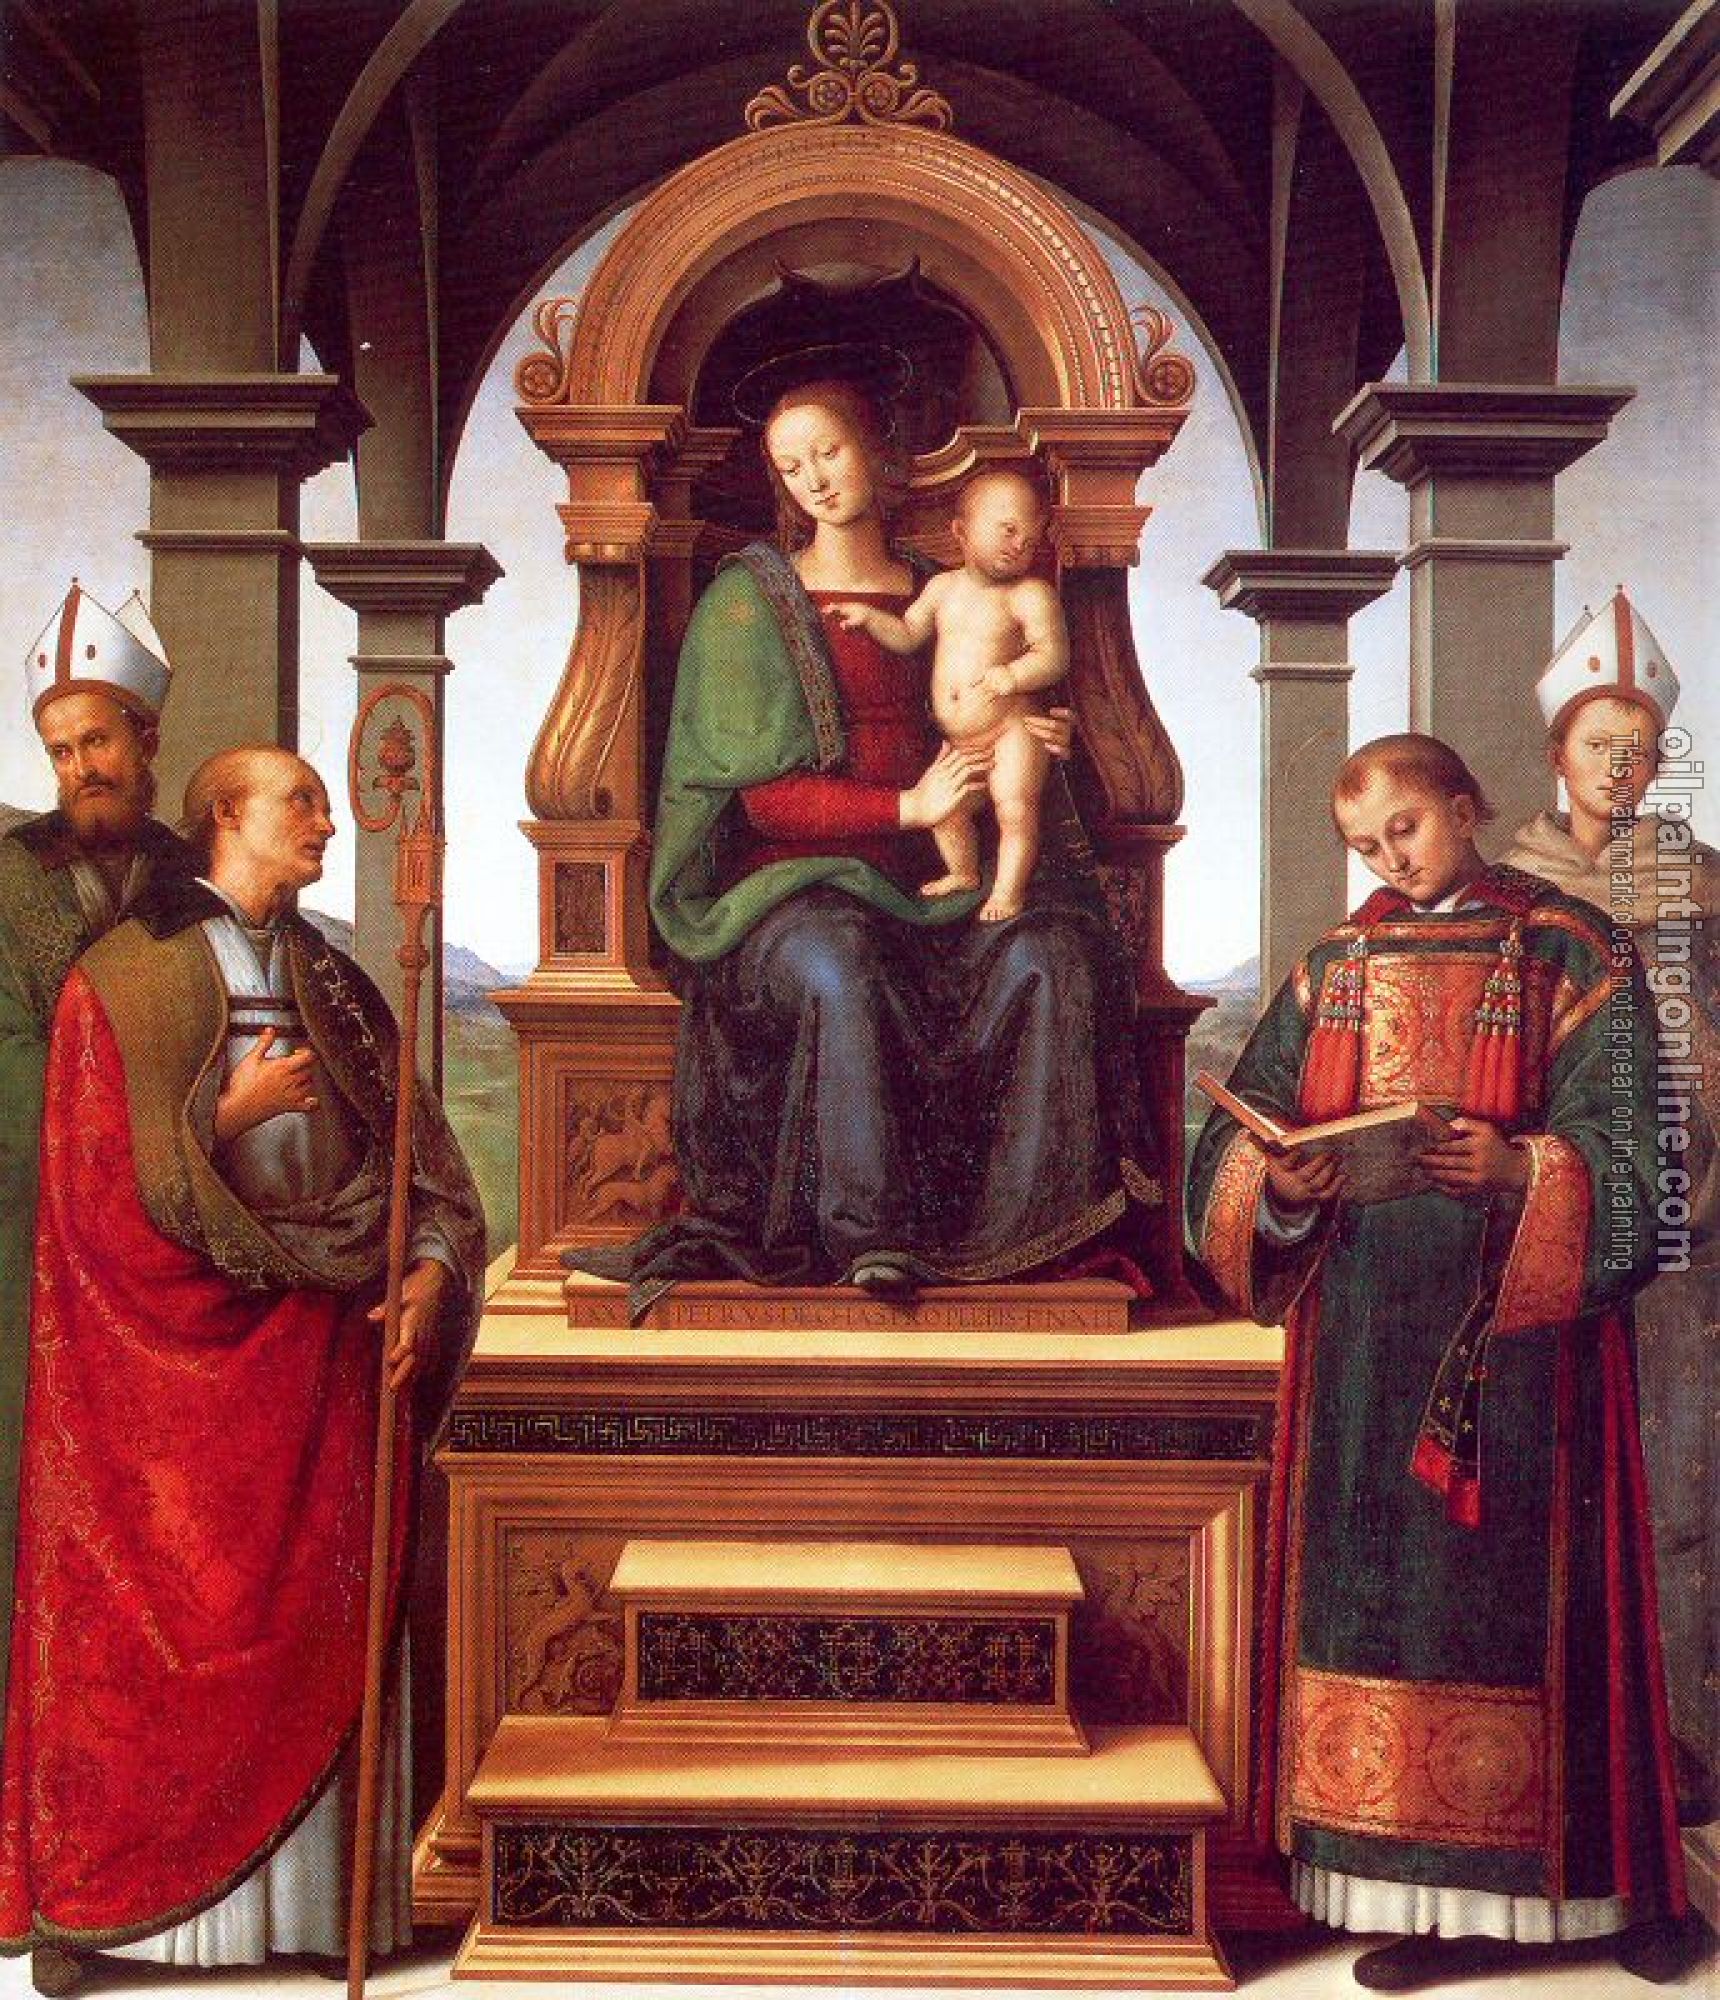 Perugino, Pietro - The Virgin and Child with Saints